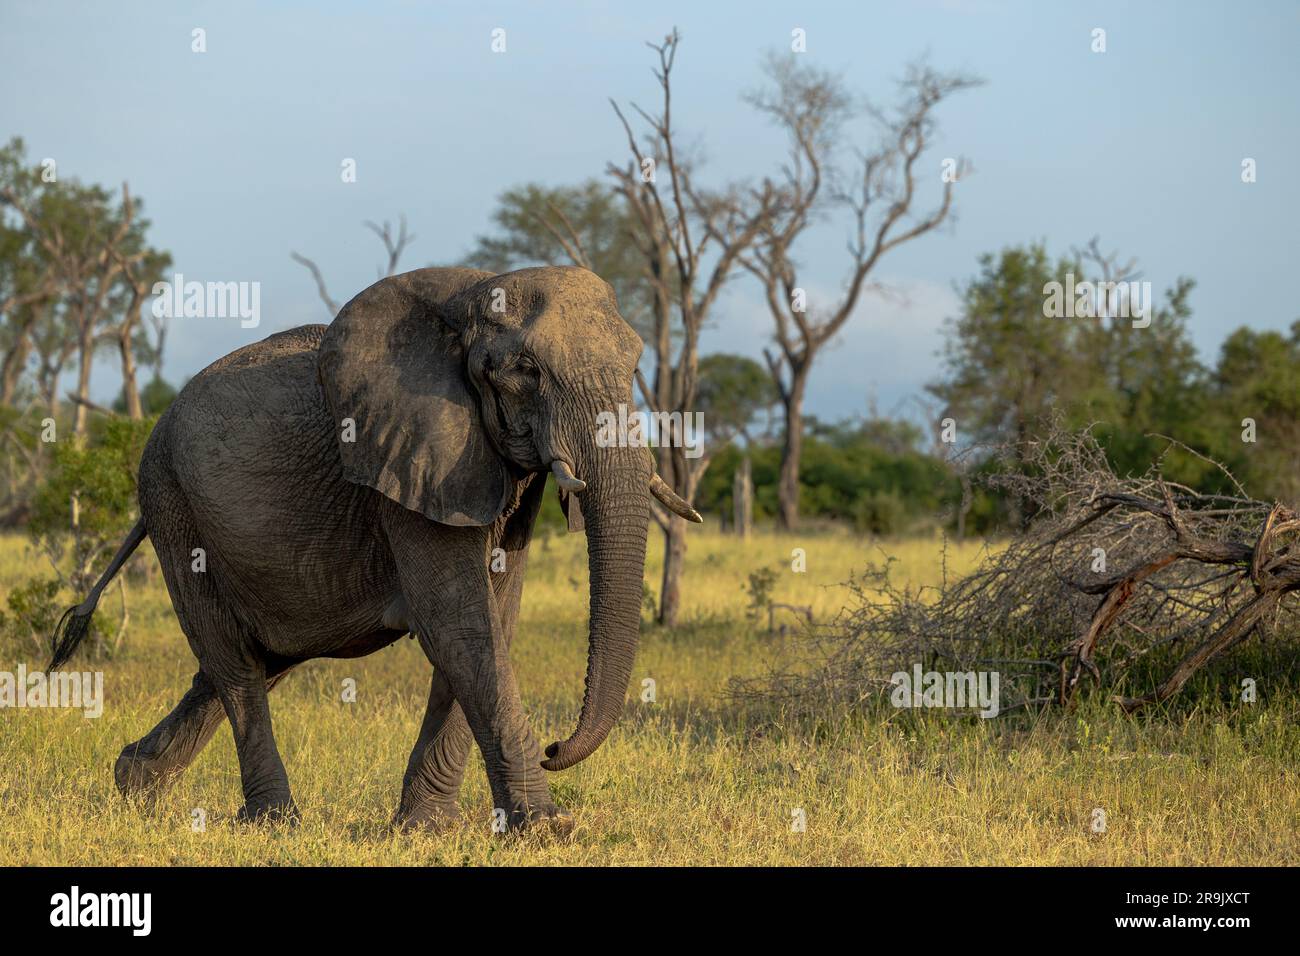 An elephant, Loxodonta africana, walking through grass. Stock Photo